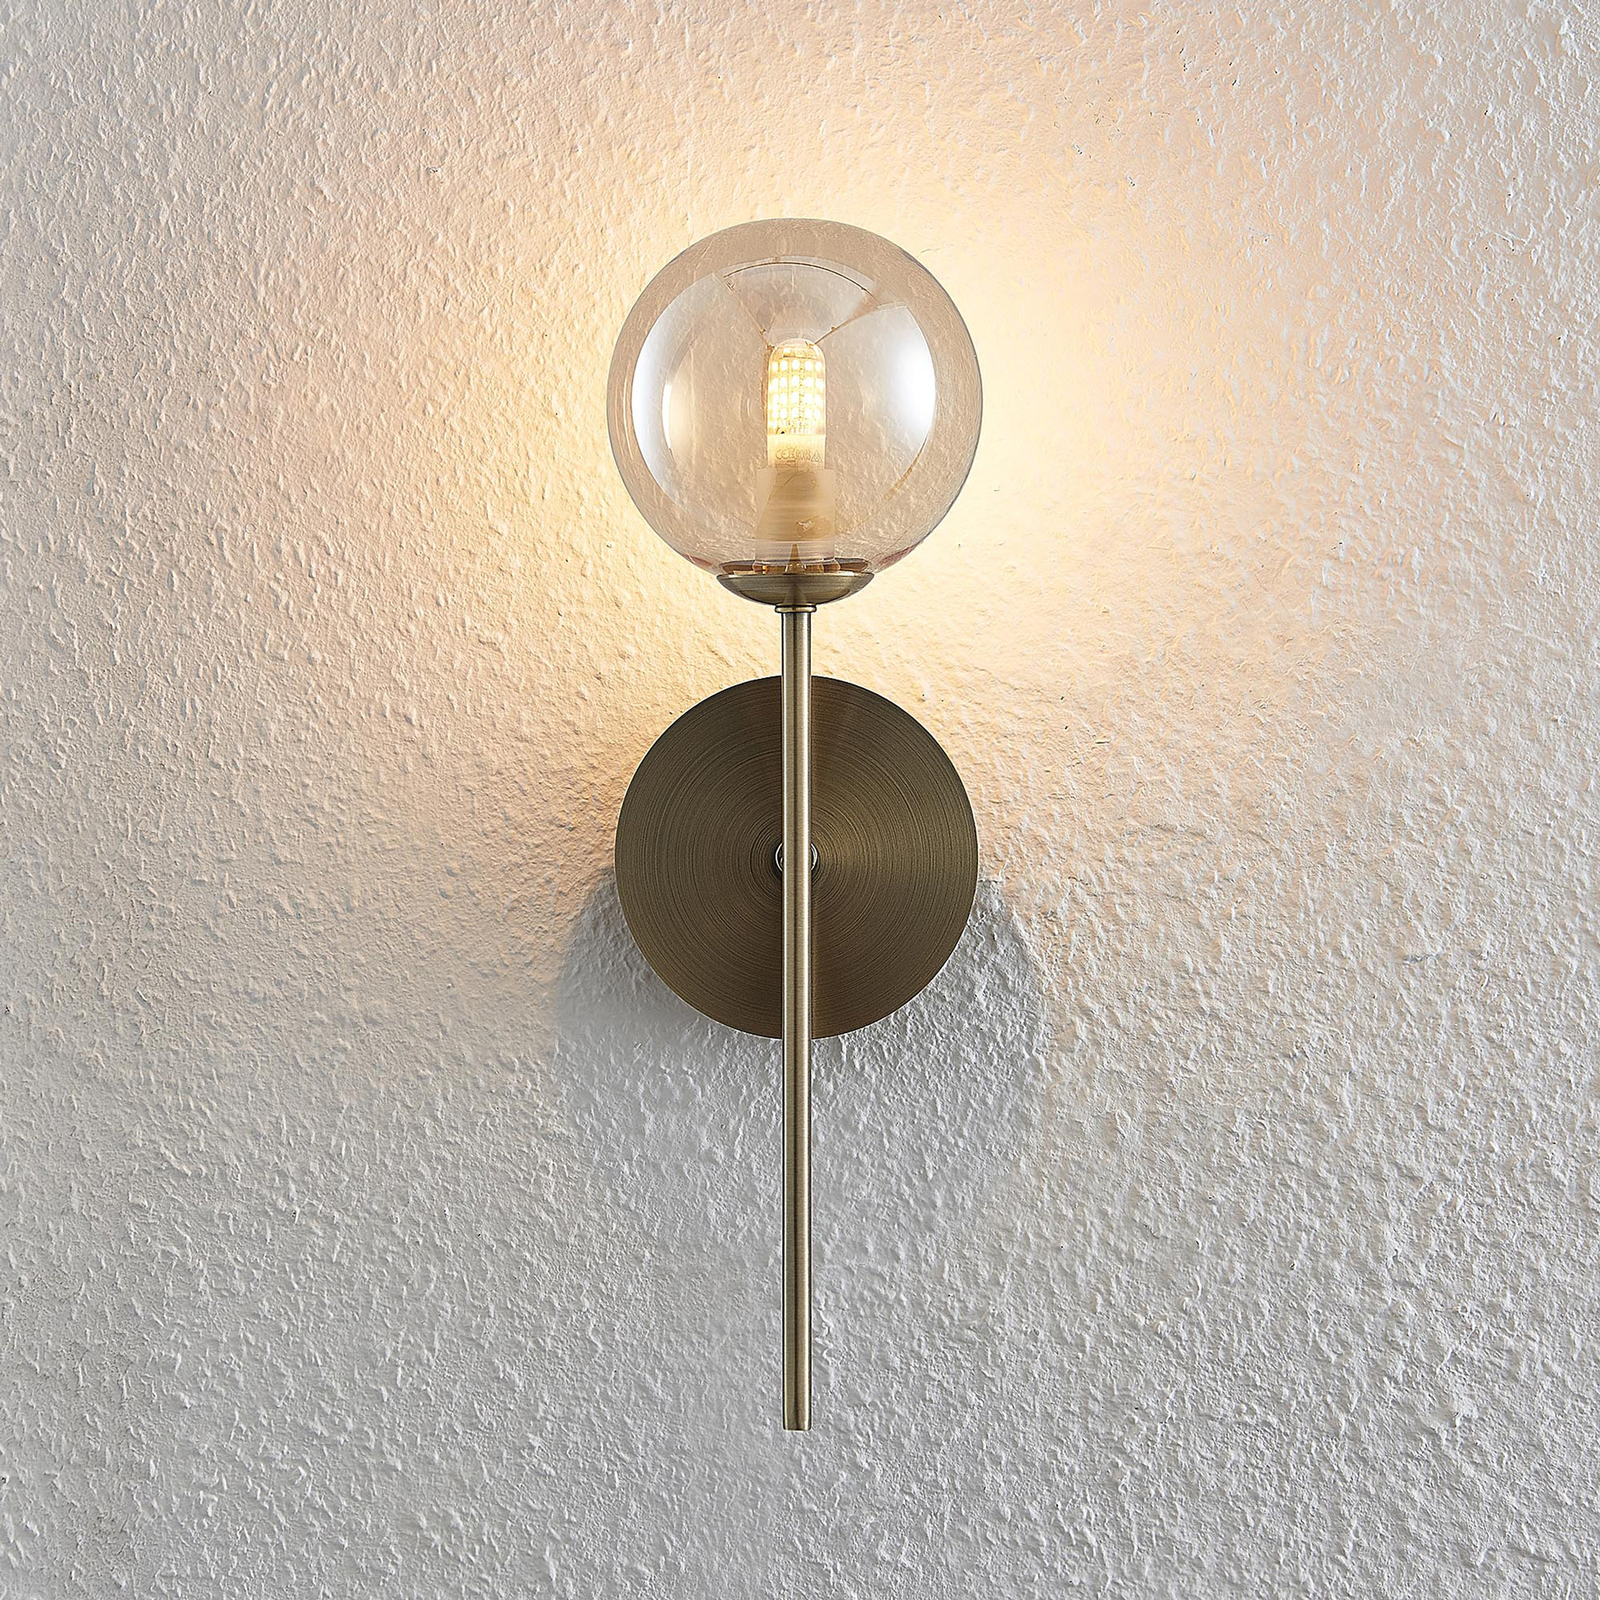 Lucande Wynona wall light, one-bulb antique brass